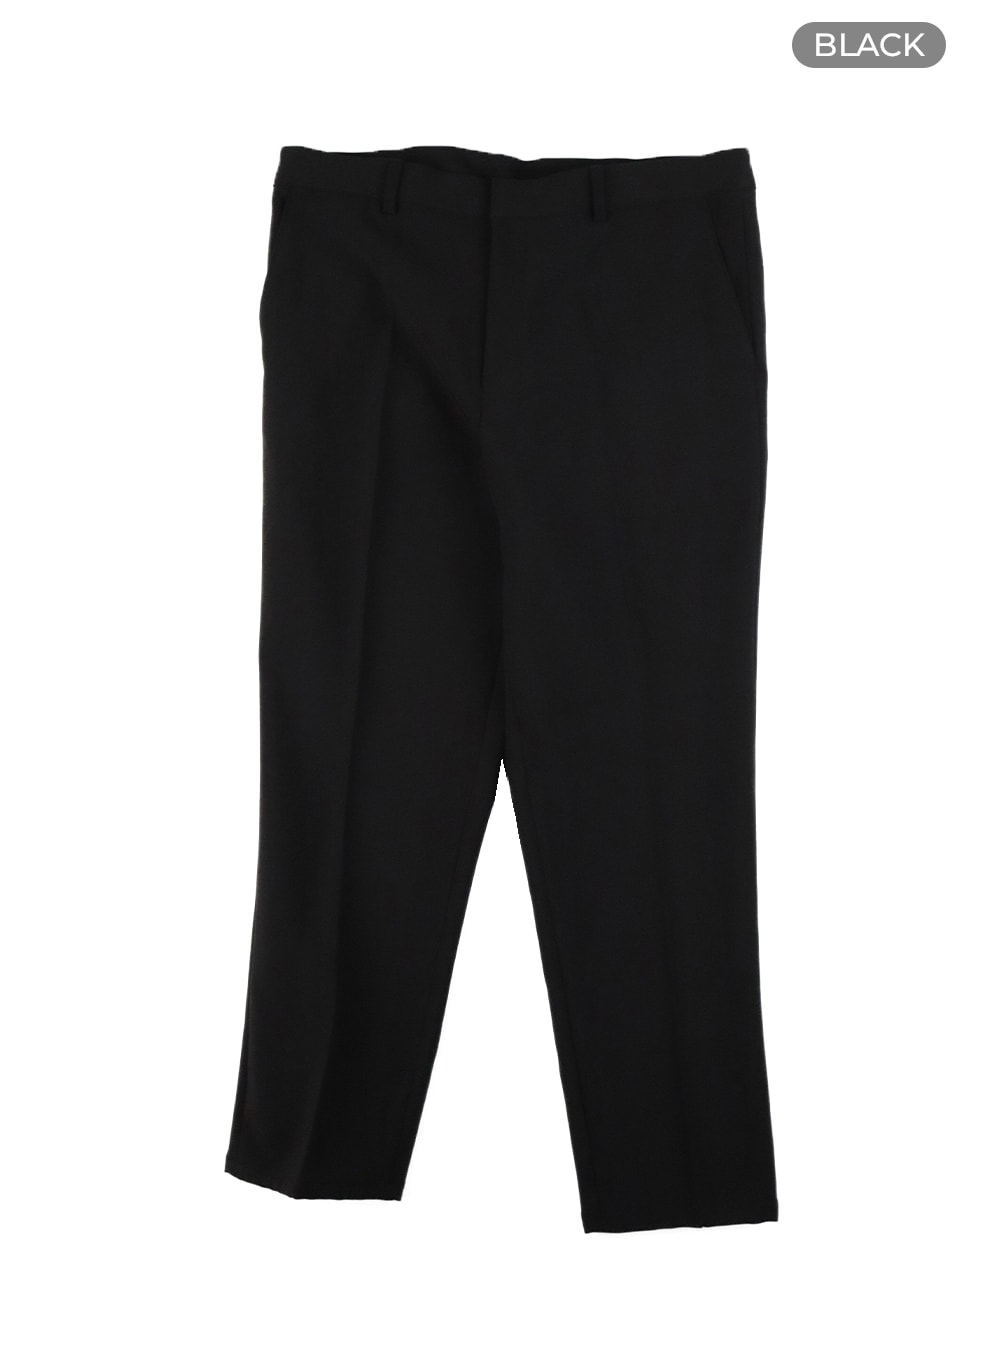 mens-straight-leg-trousers-ia401 / Black